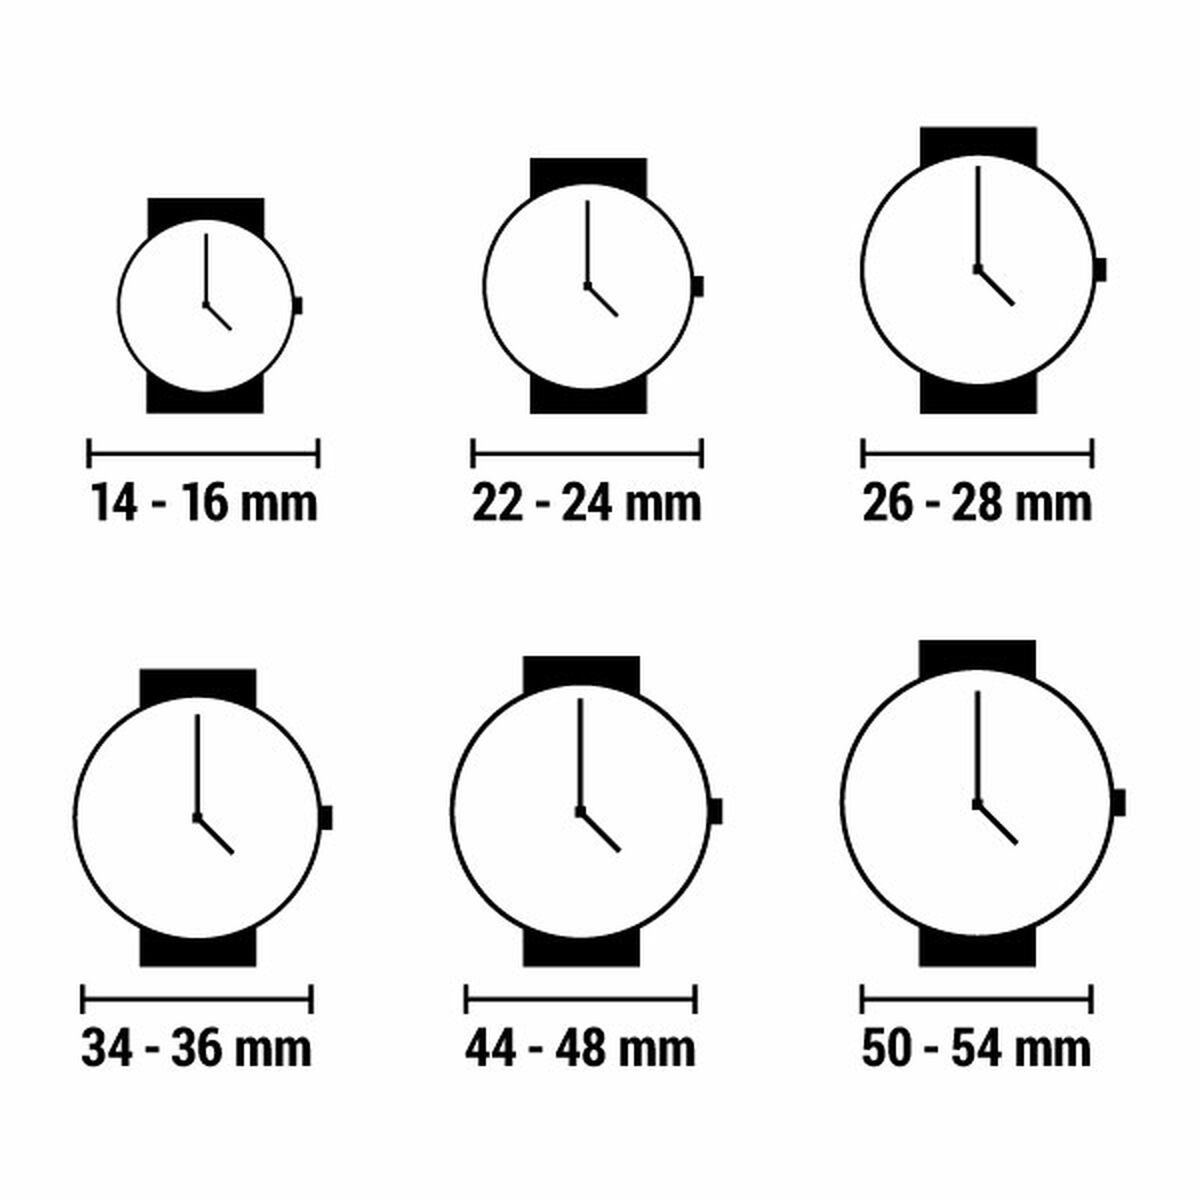 Horloge Dames Casio G-Shock CLASSIC SKELETON GOLD ACCENT (Ø 46 mm)